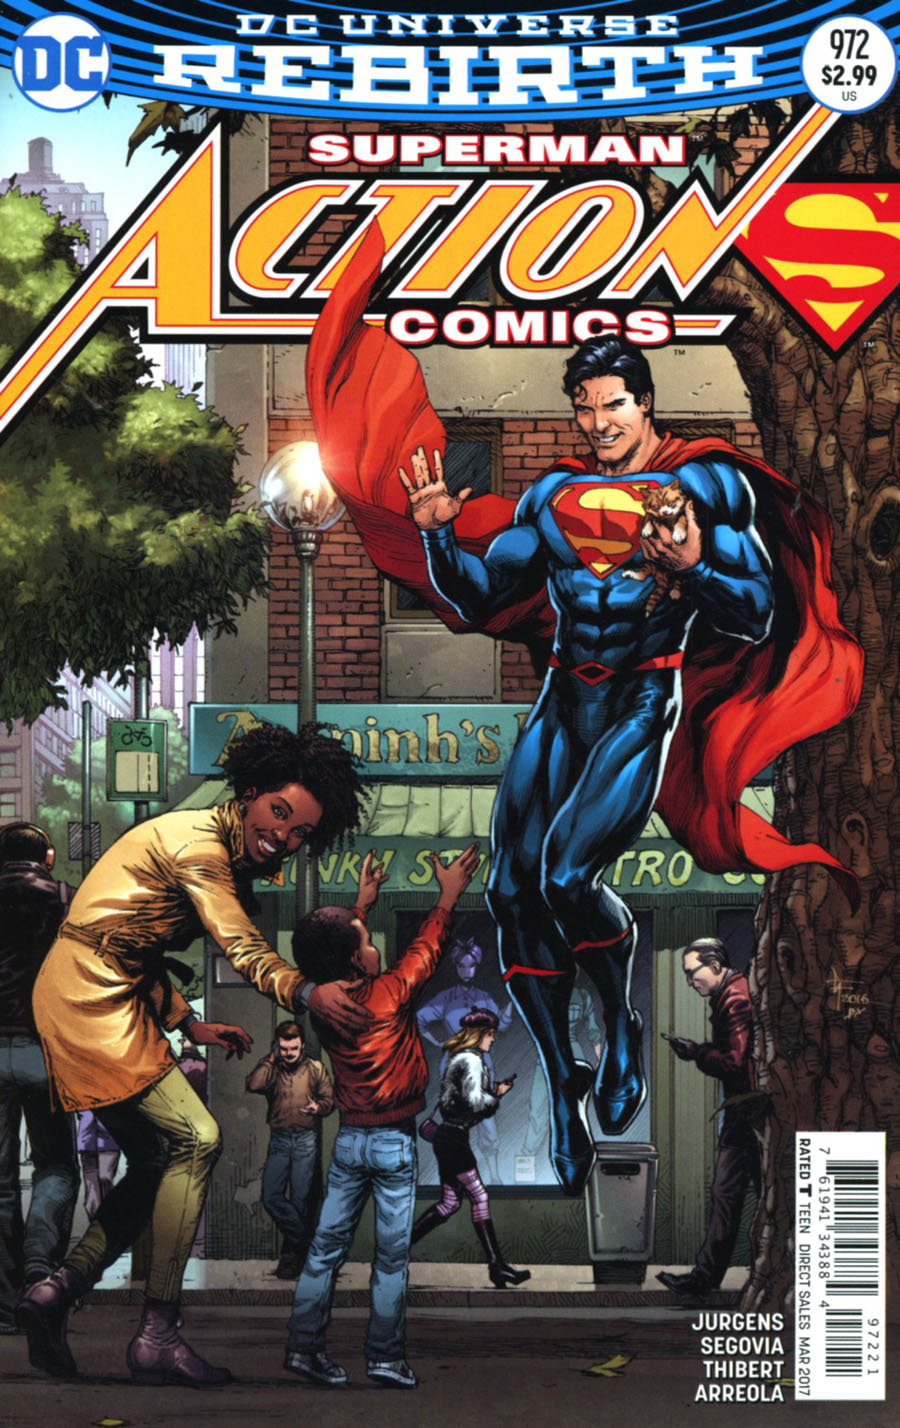 Action Comics #972